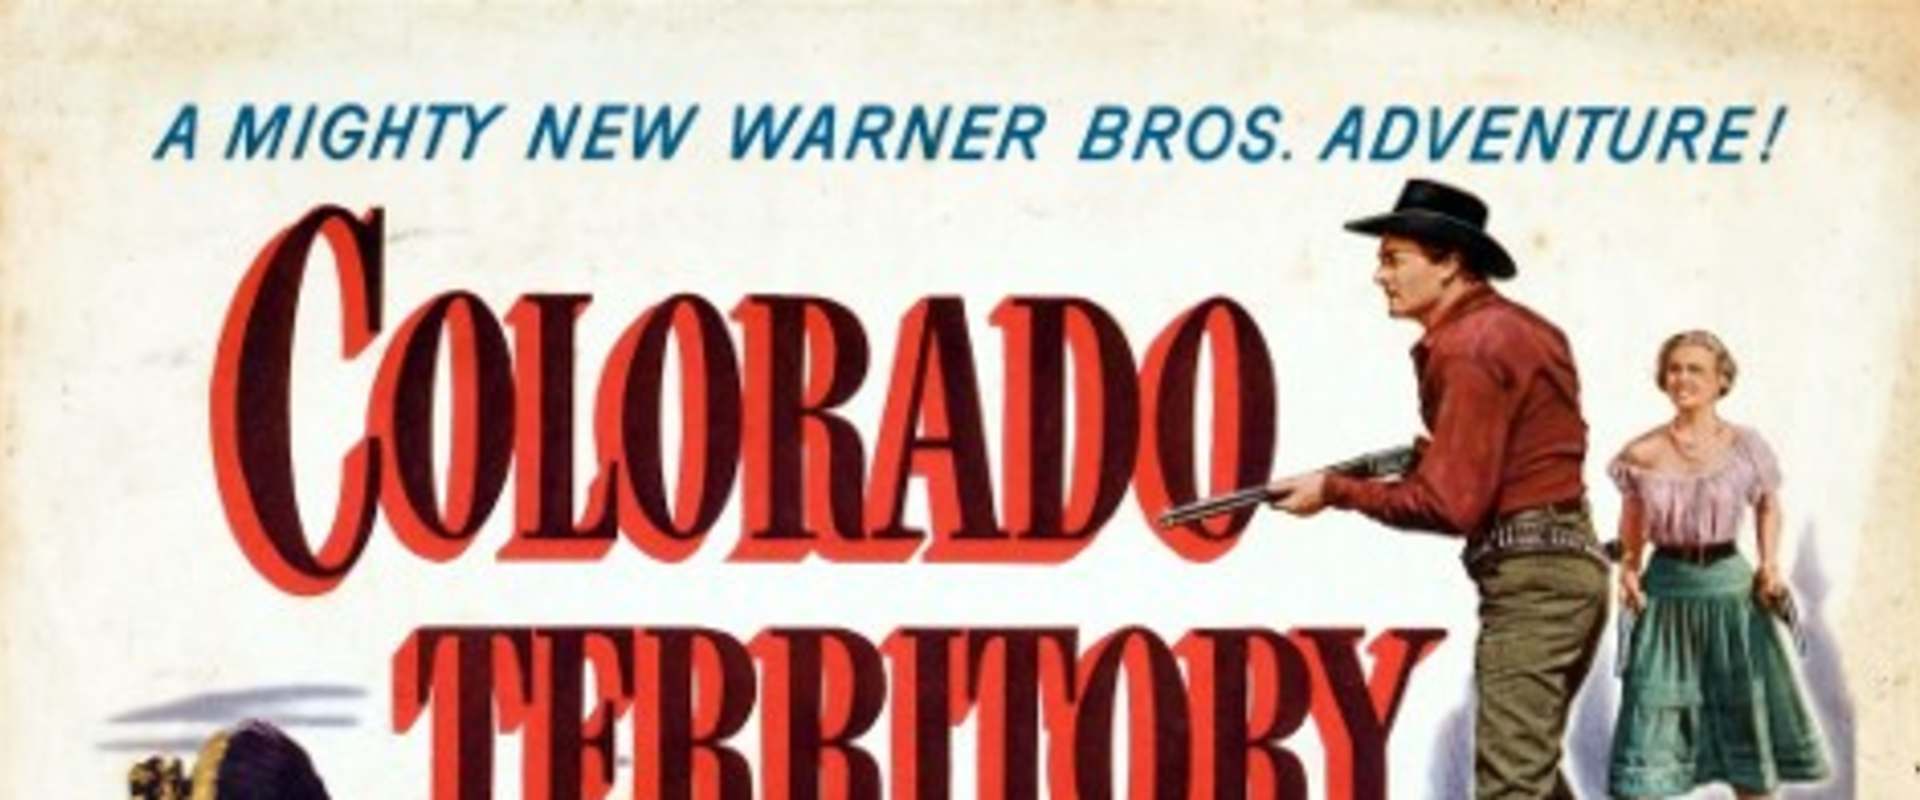 Colorado Territory background 1